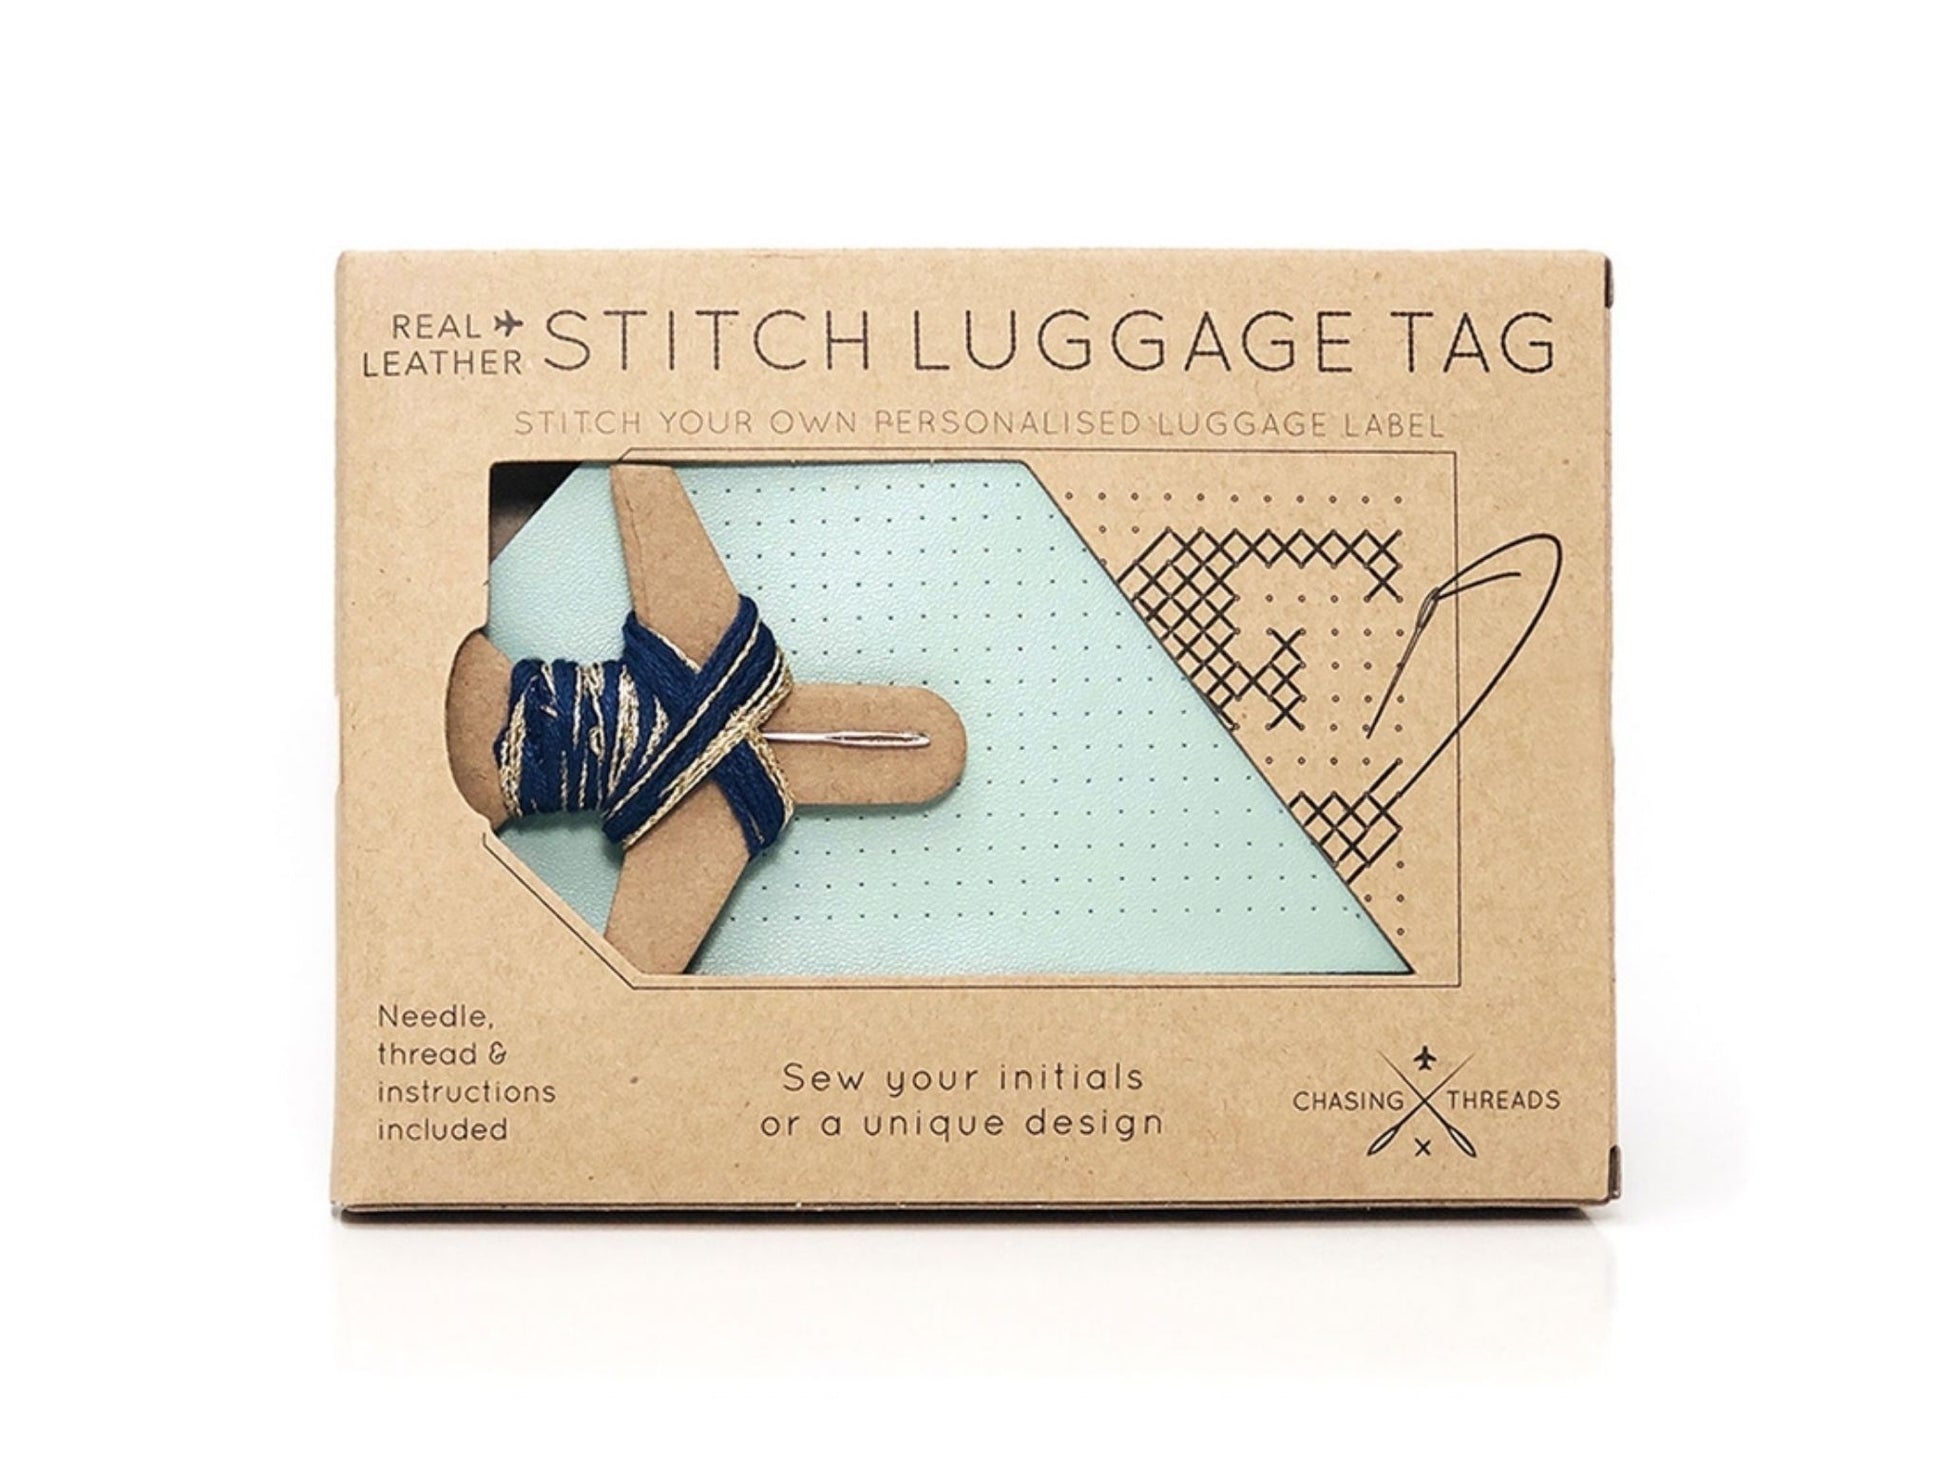 Luggage Tag - Genuine Leather Handmade Luggage Tag